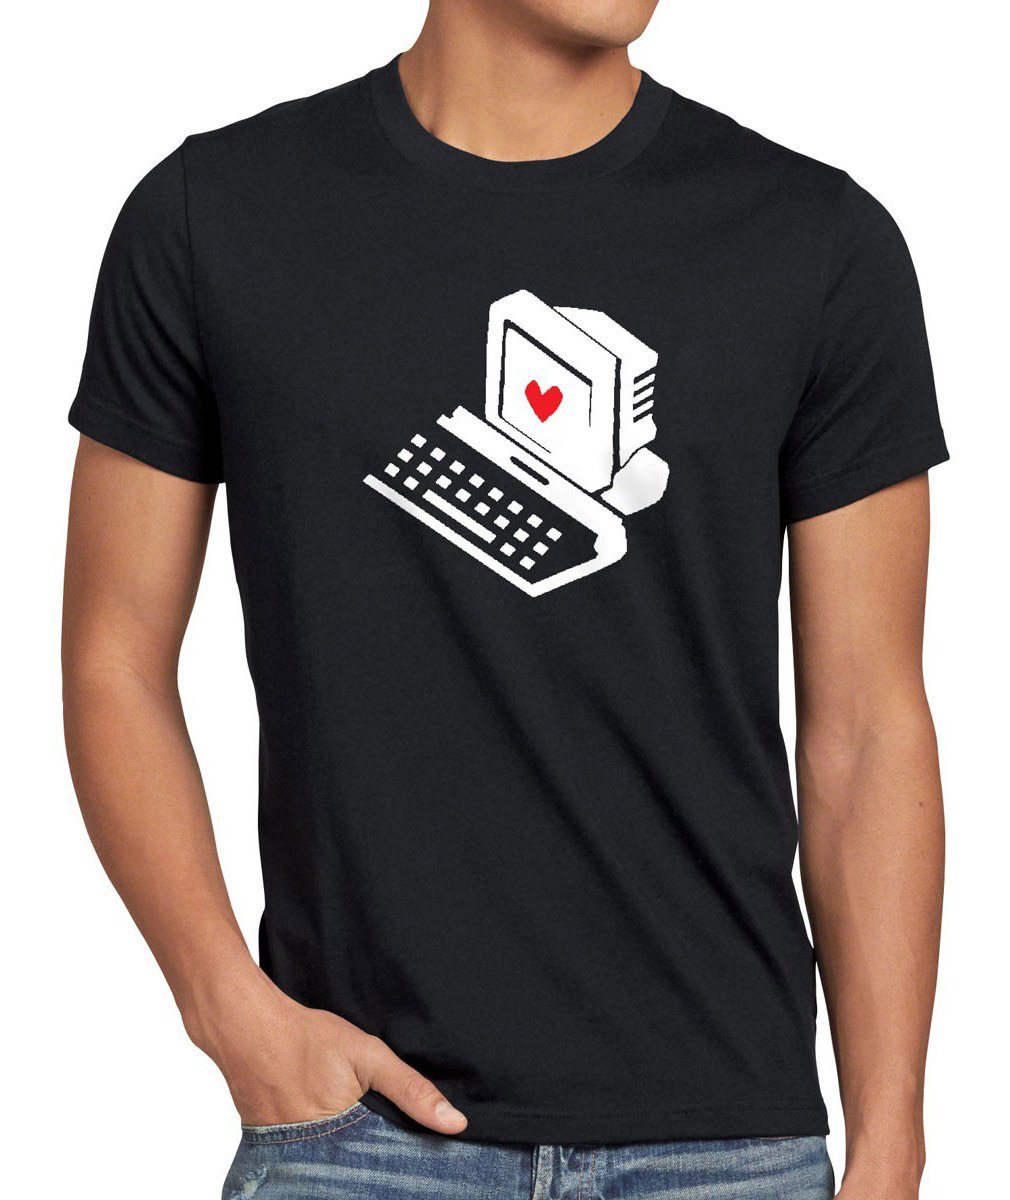 Sheldon Computer Print-Shirt PC Mac tbbt Nerd Big theory Bang Retro style3 Herren Herz Love T-Shirt schwarz